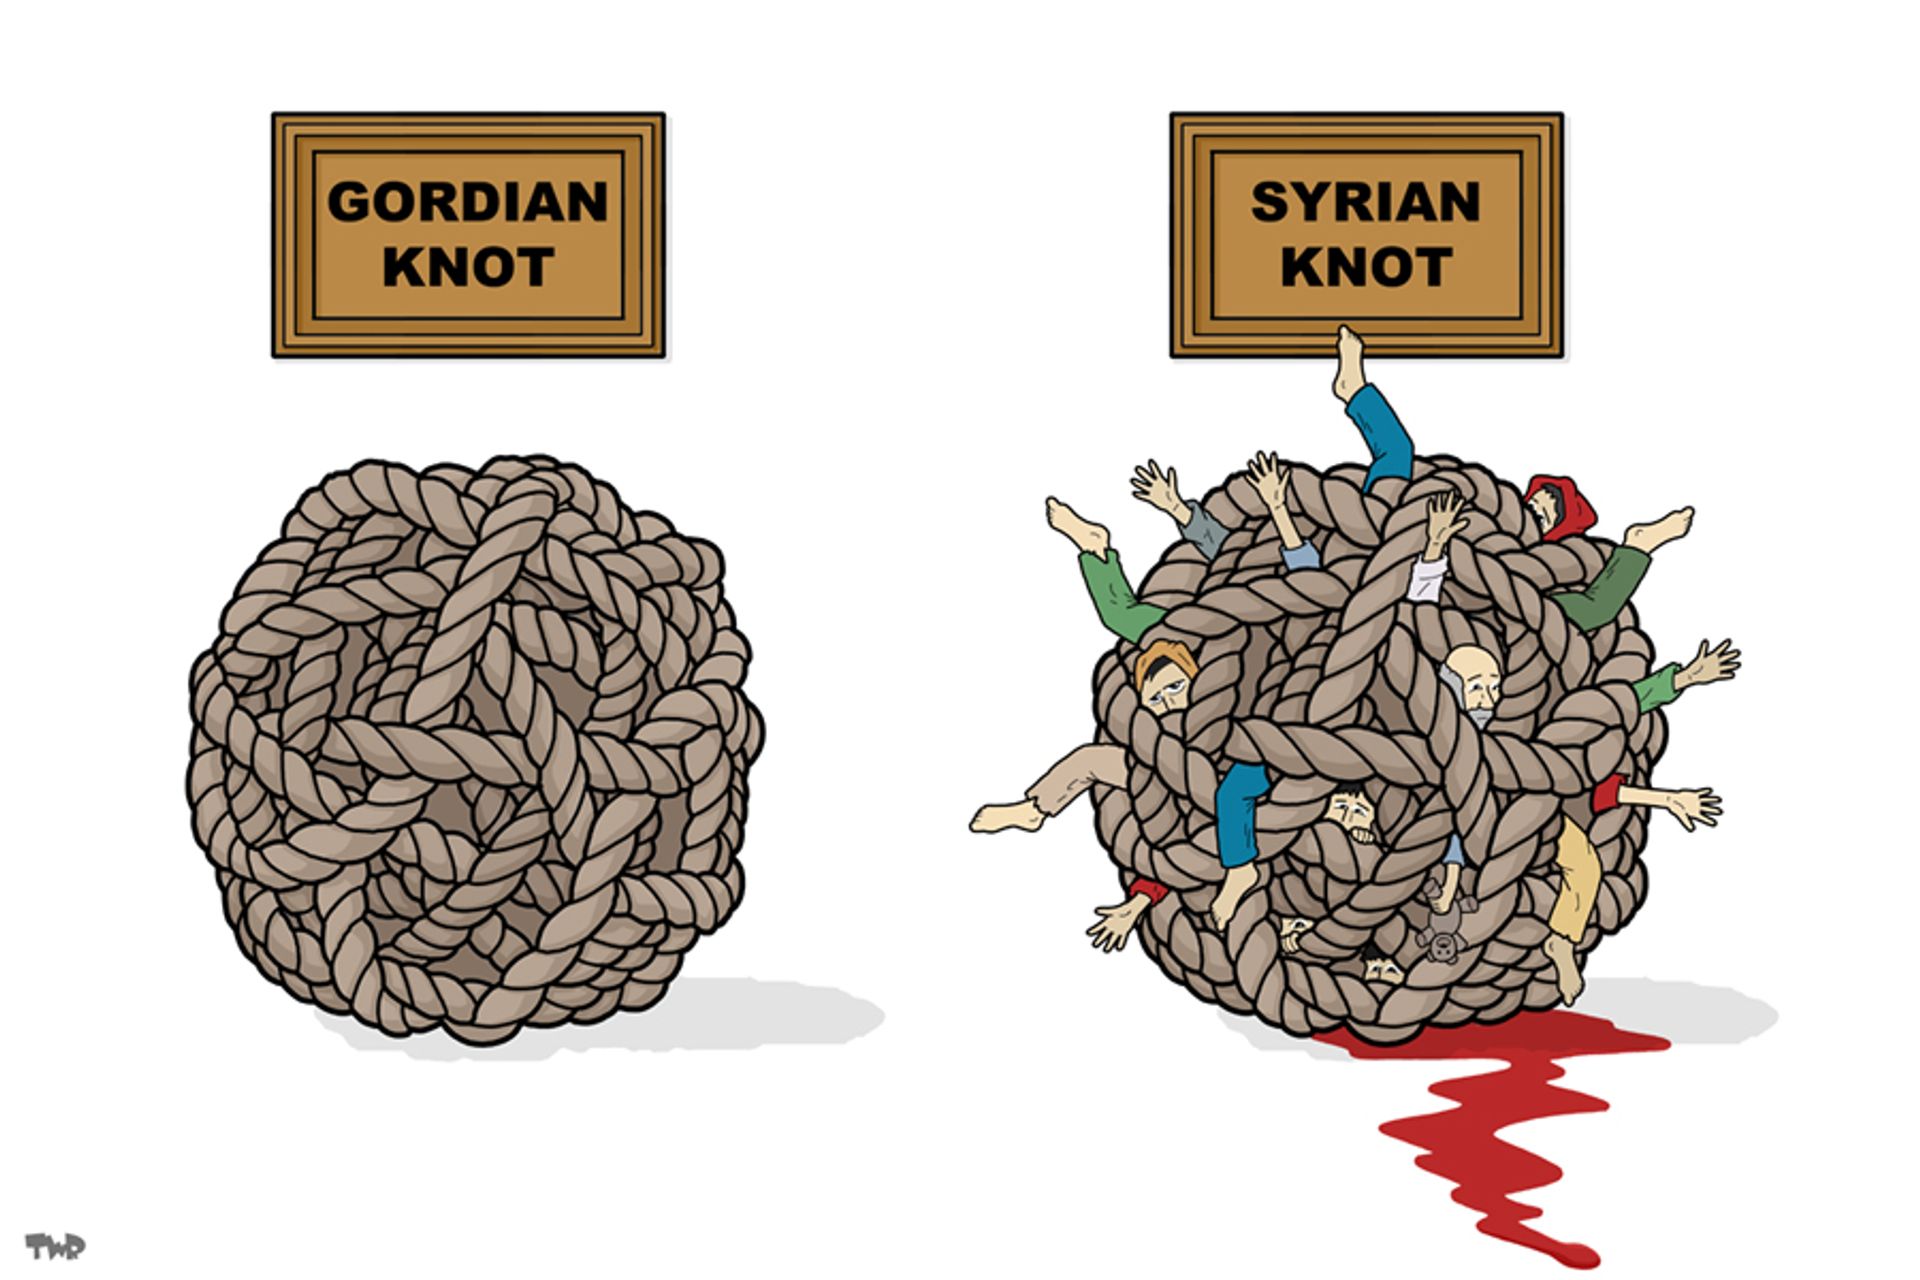 Syria-Gordian knot